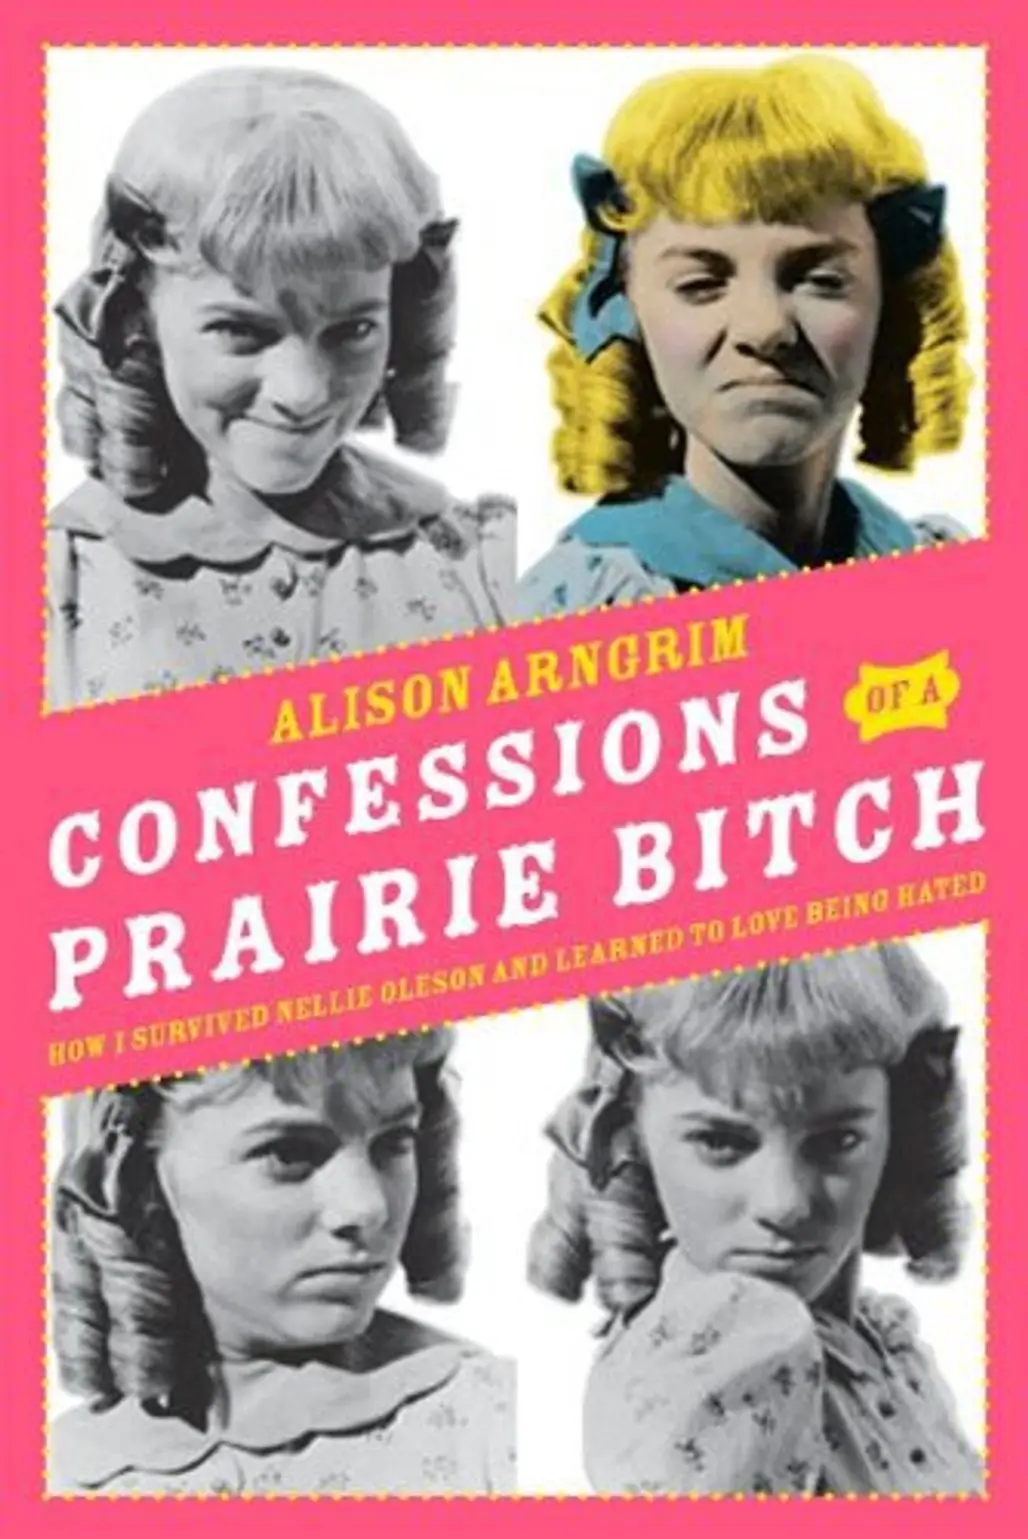 “Confessions of a Prairie Bitch” by Alison Arngrim